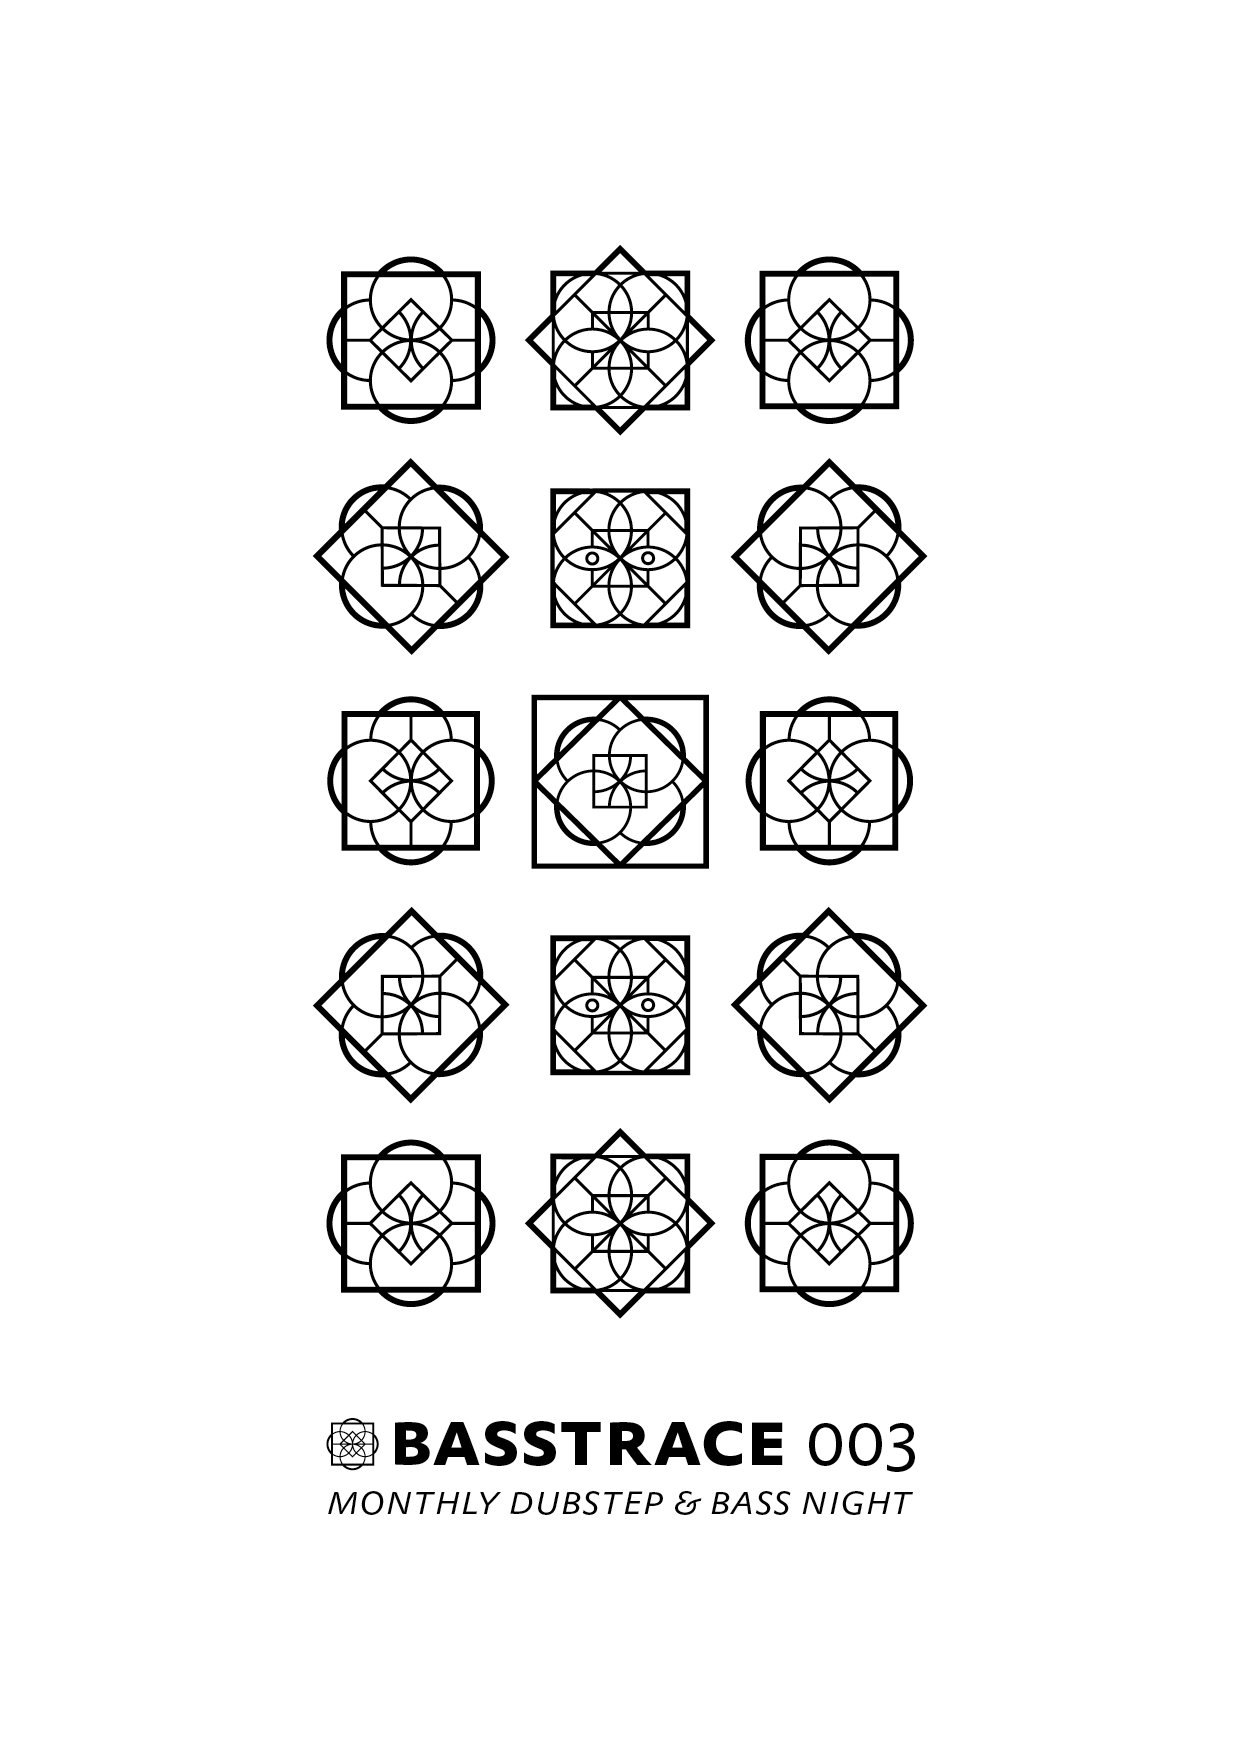 Basstrace 003